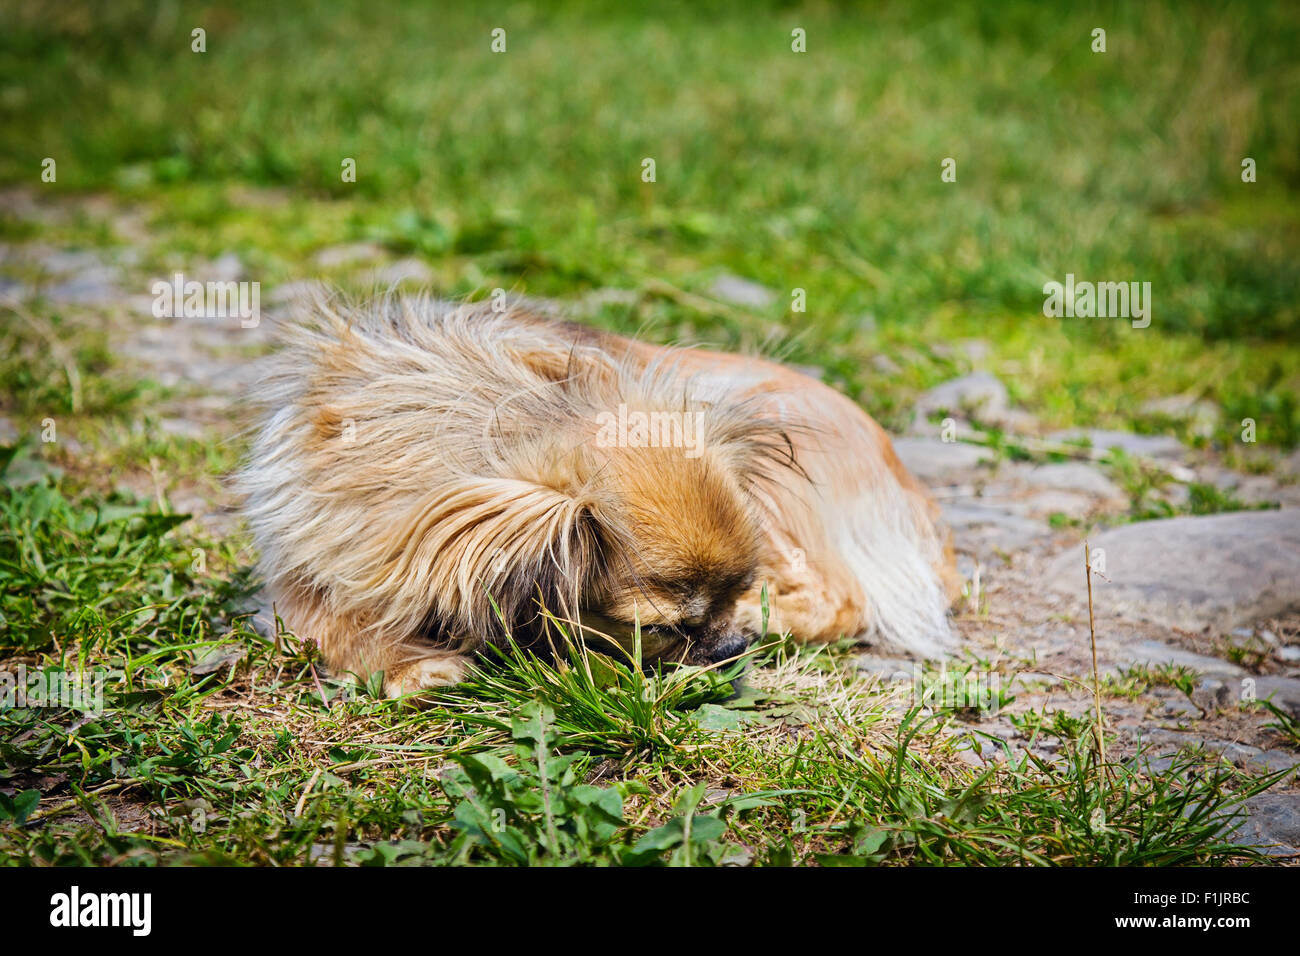 Pekingese dog is sleeping on a grass outdoors Stock Photo